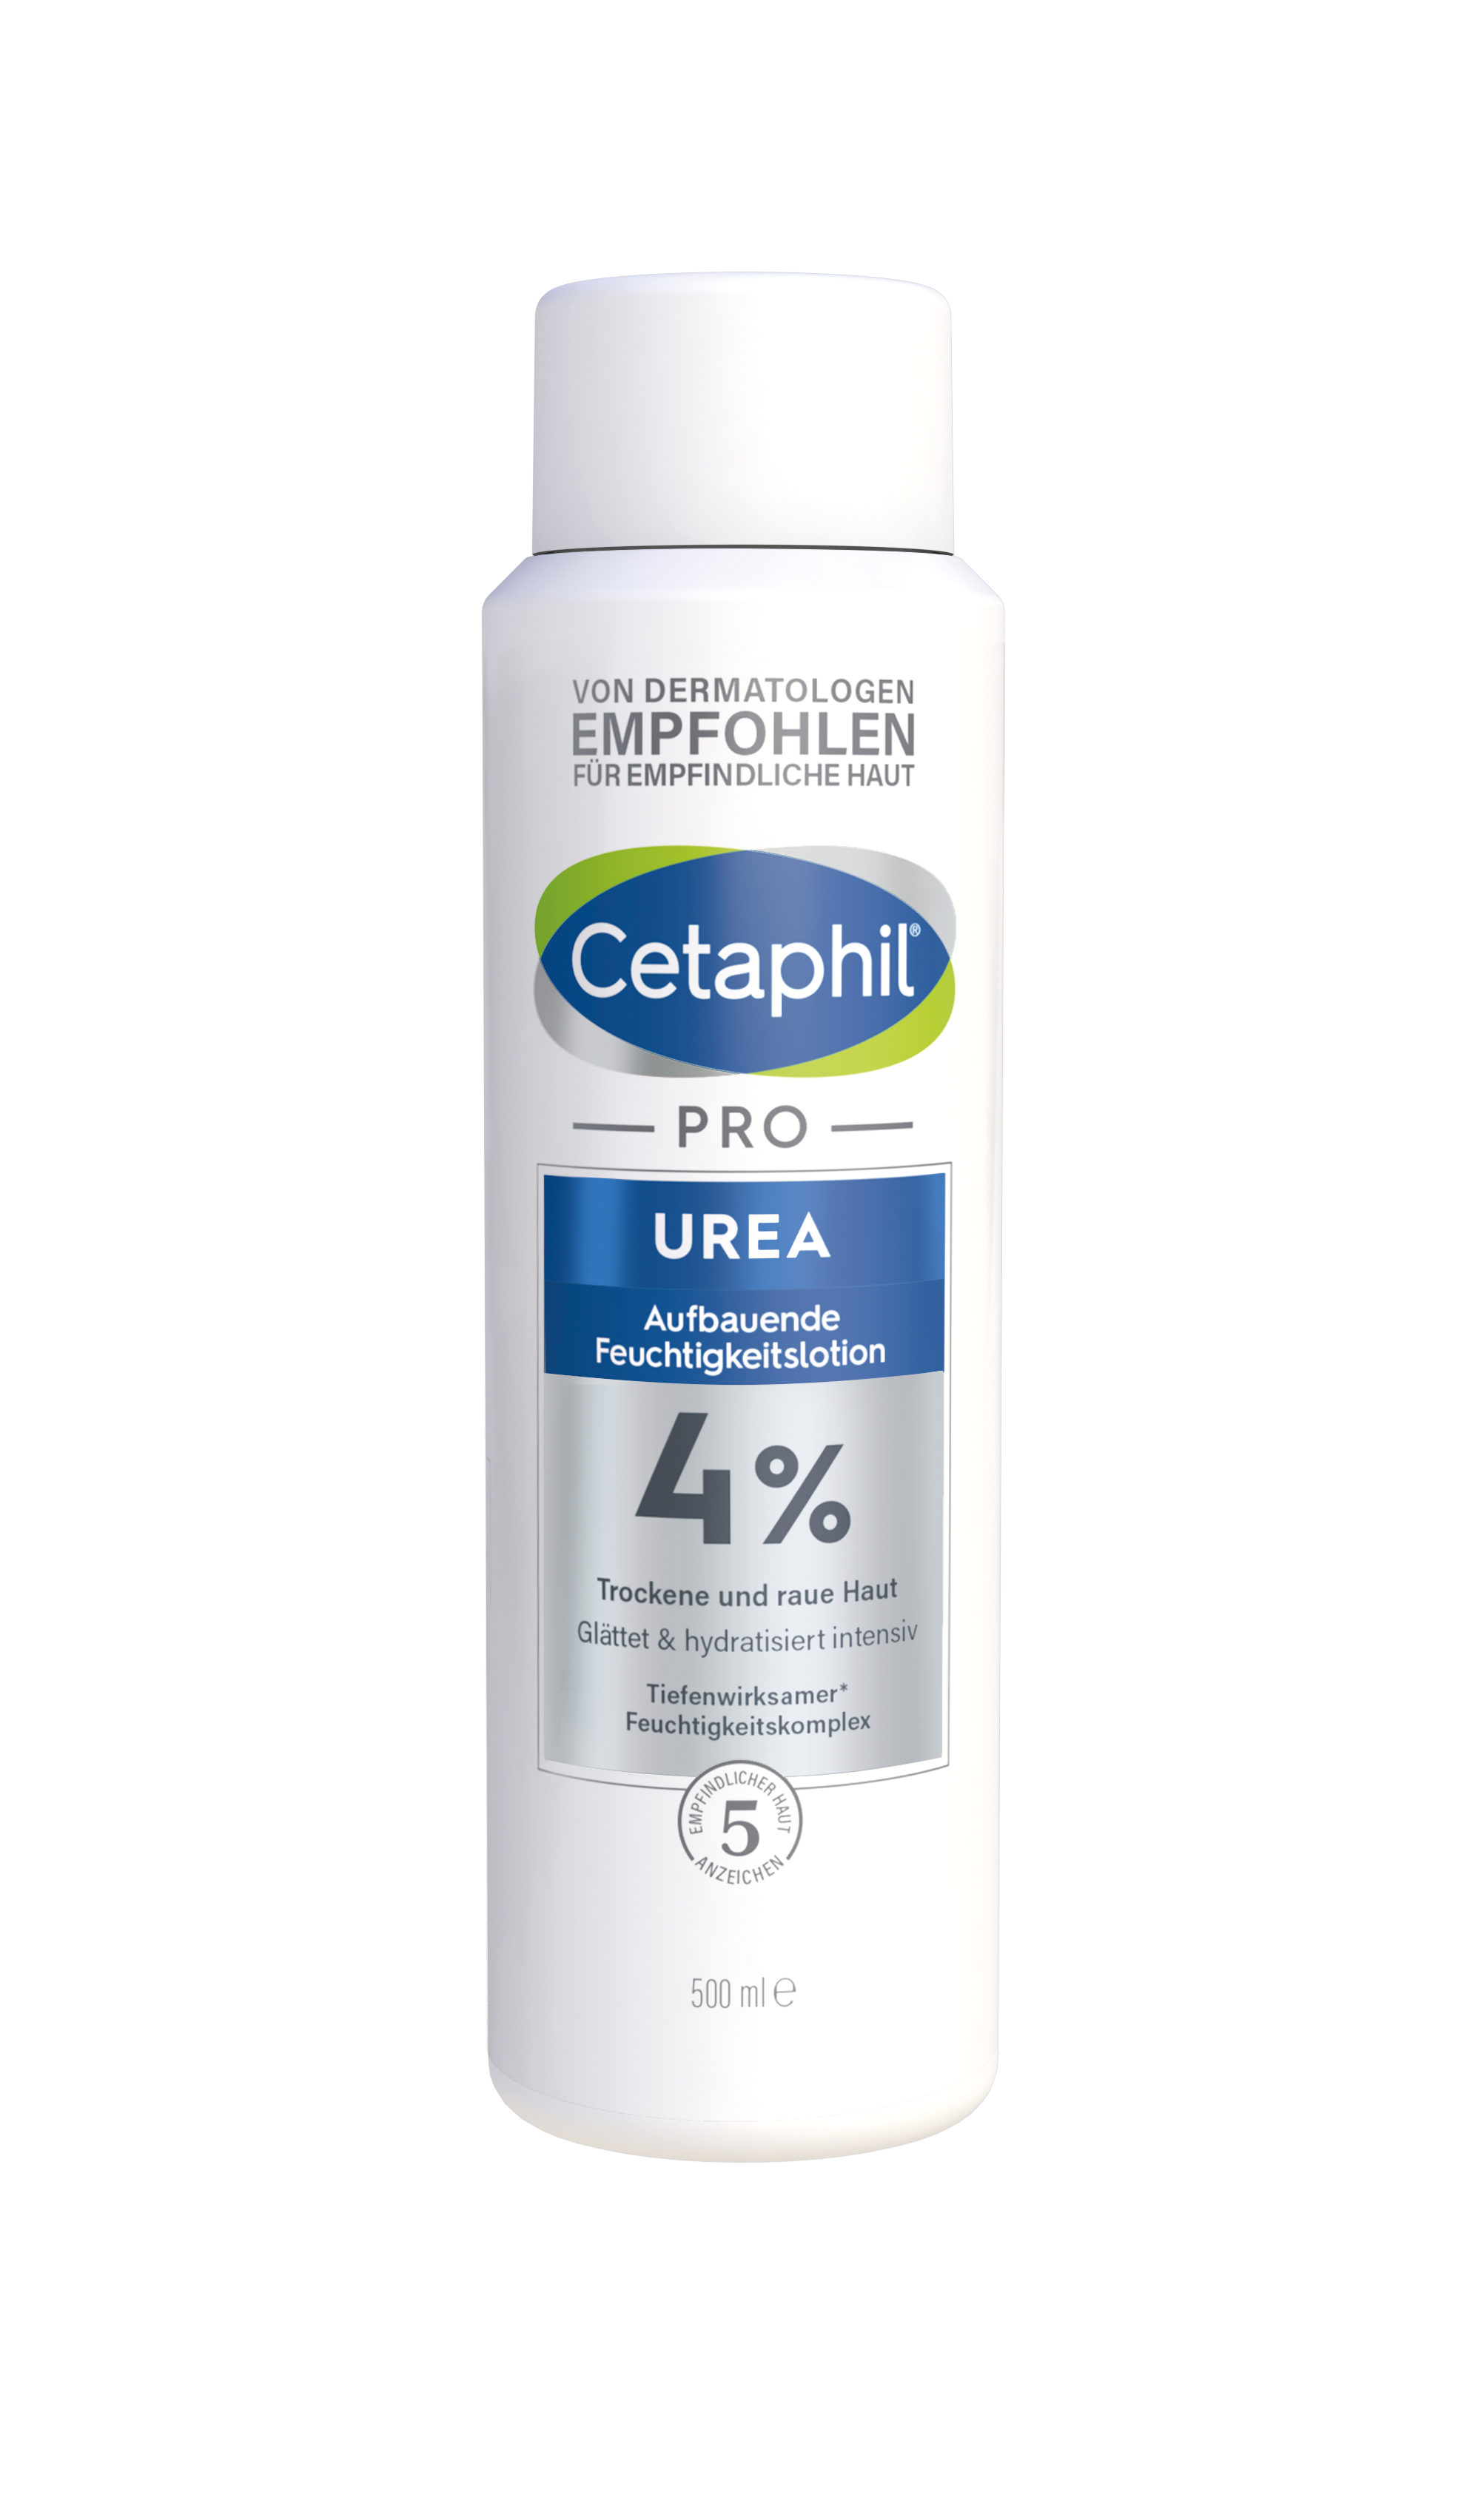 Cetaphil PRO Urea 4% Aufbauende Feuchtigkeitslotion (500 ml)